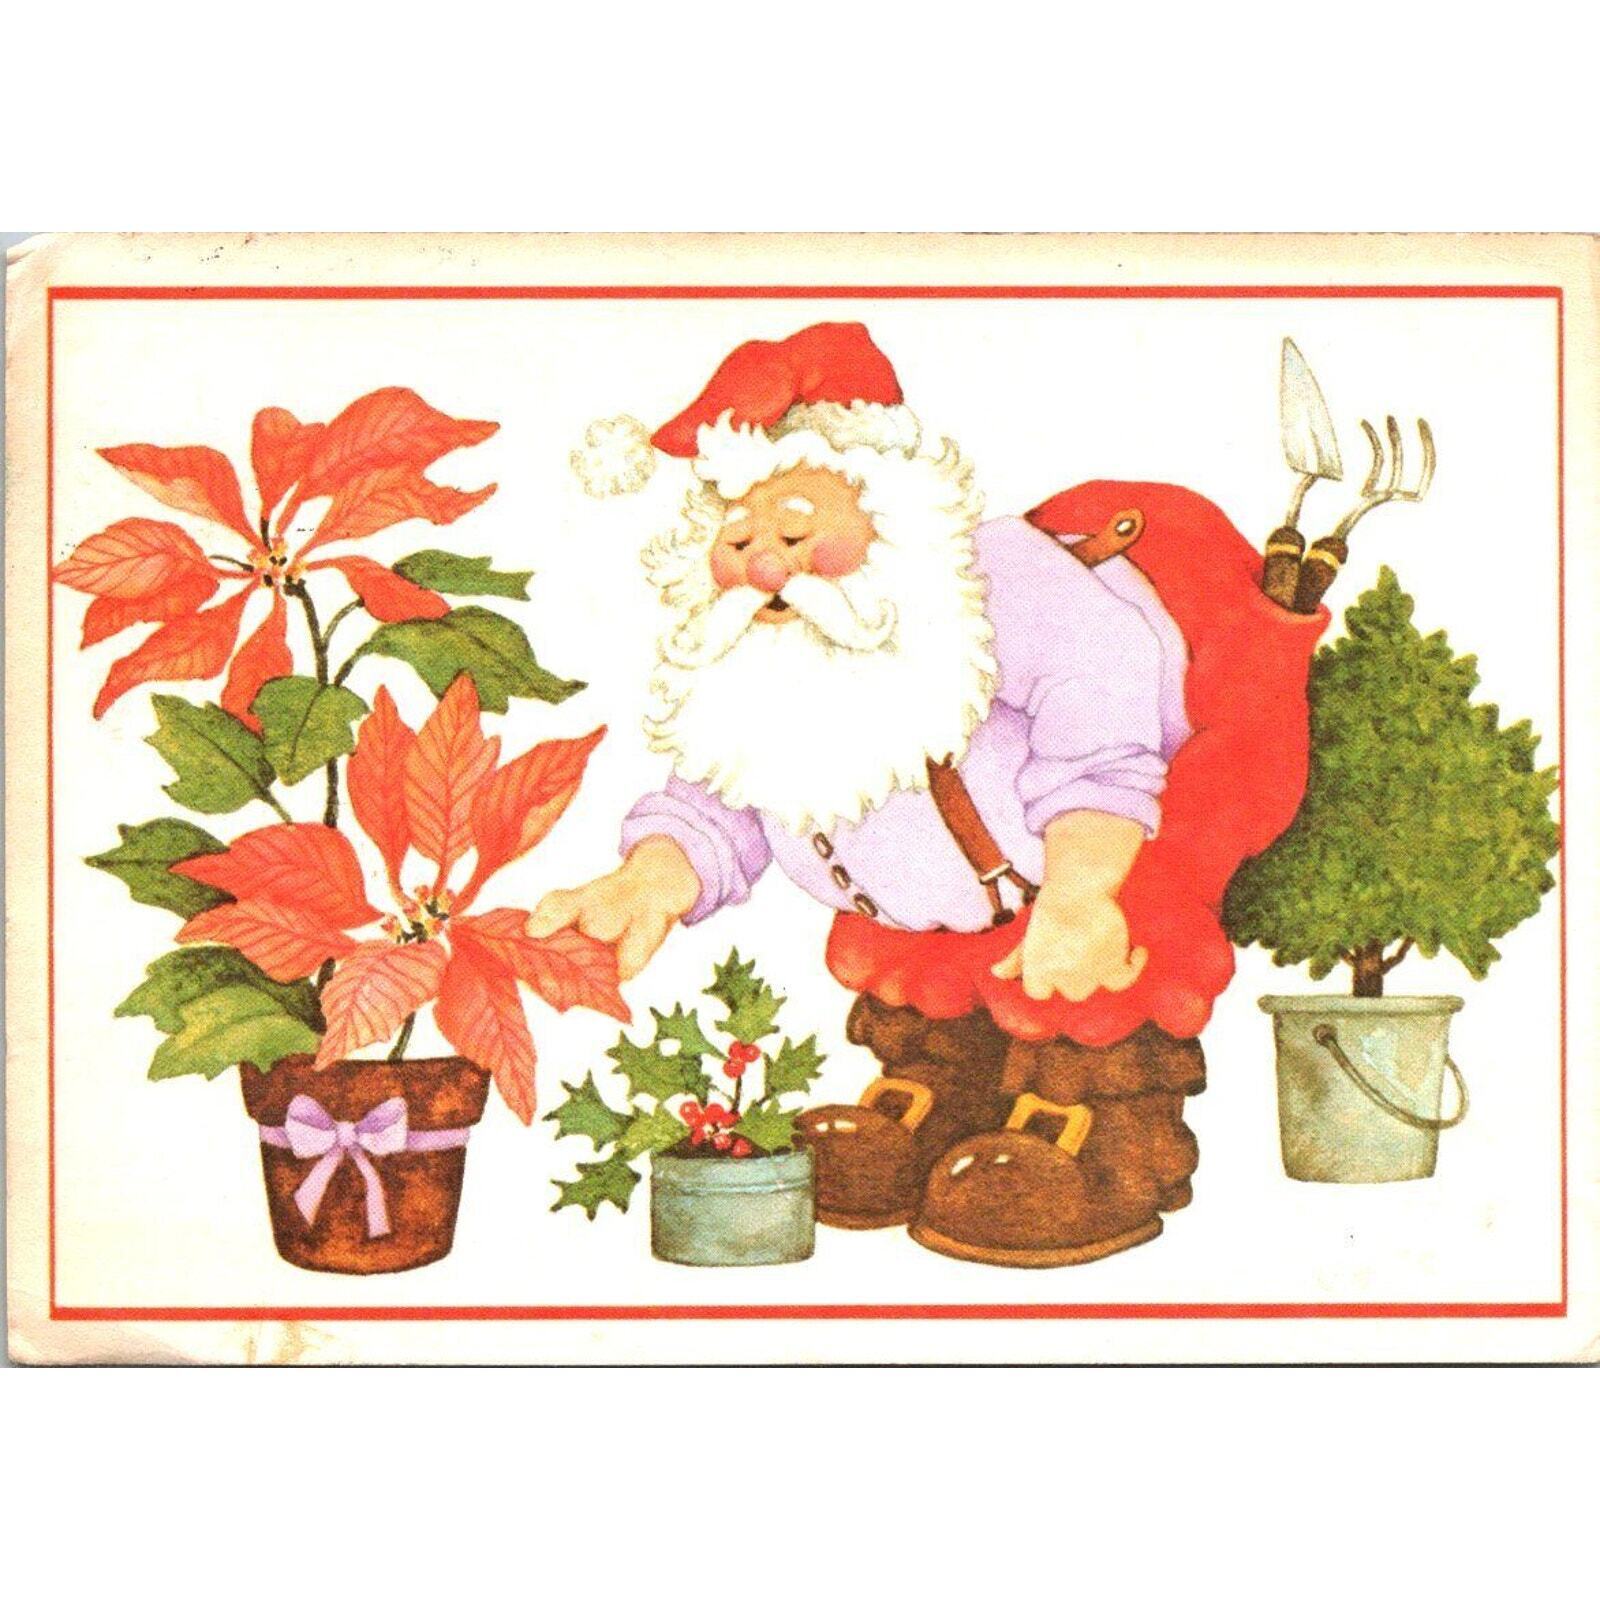 Vintage Christmas Postcard 1977 Holiday Greetings Santa Gardening